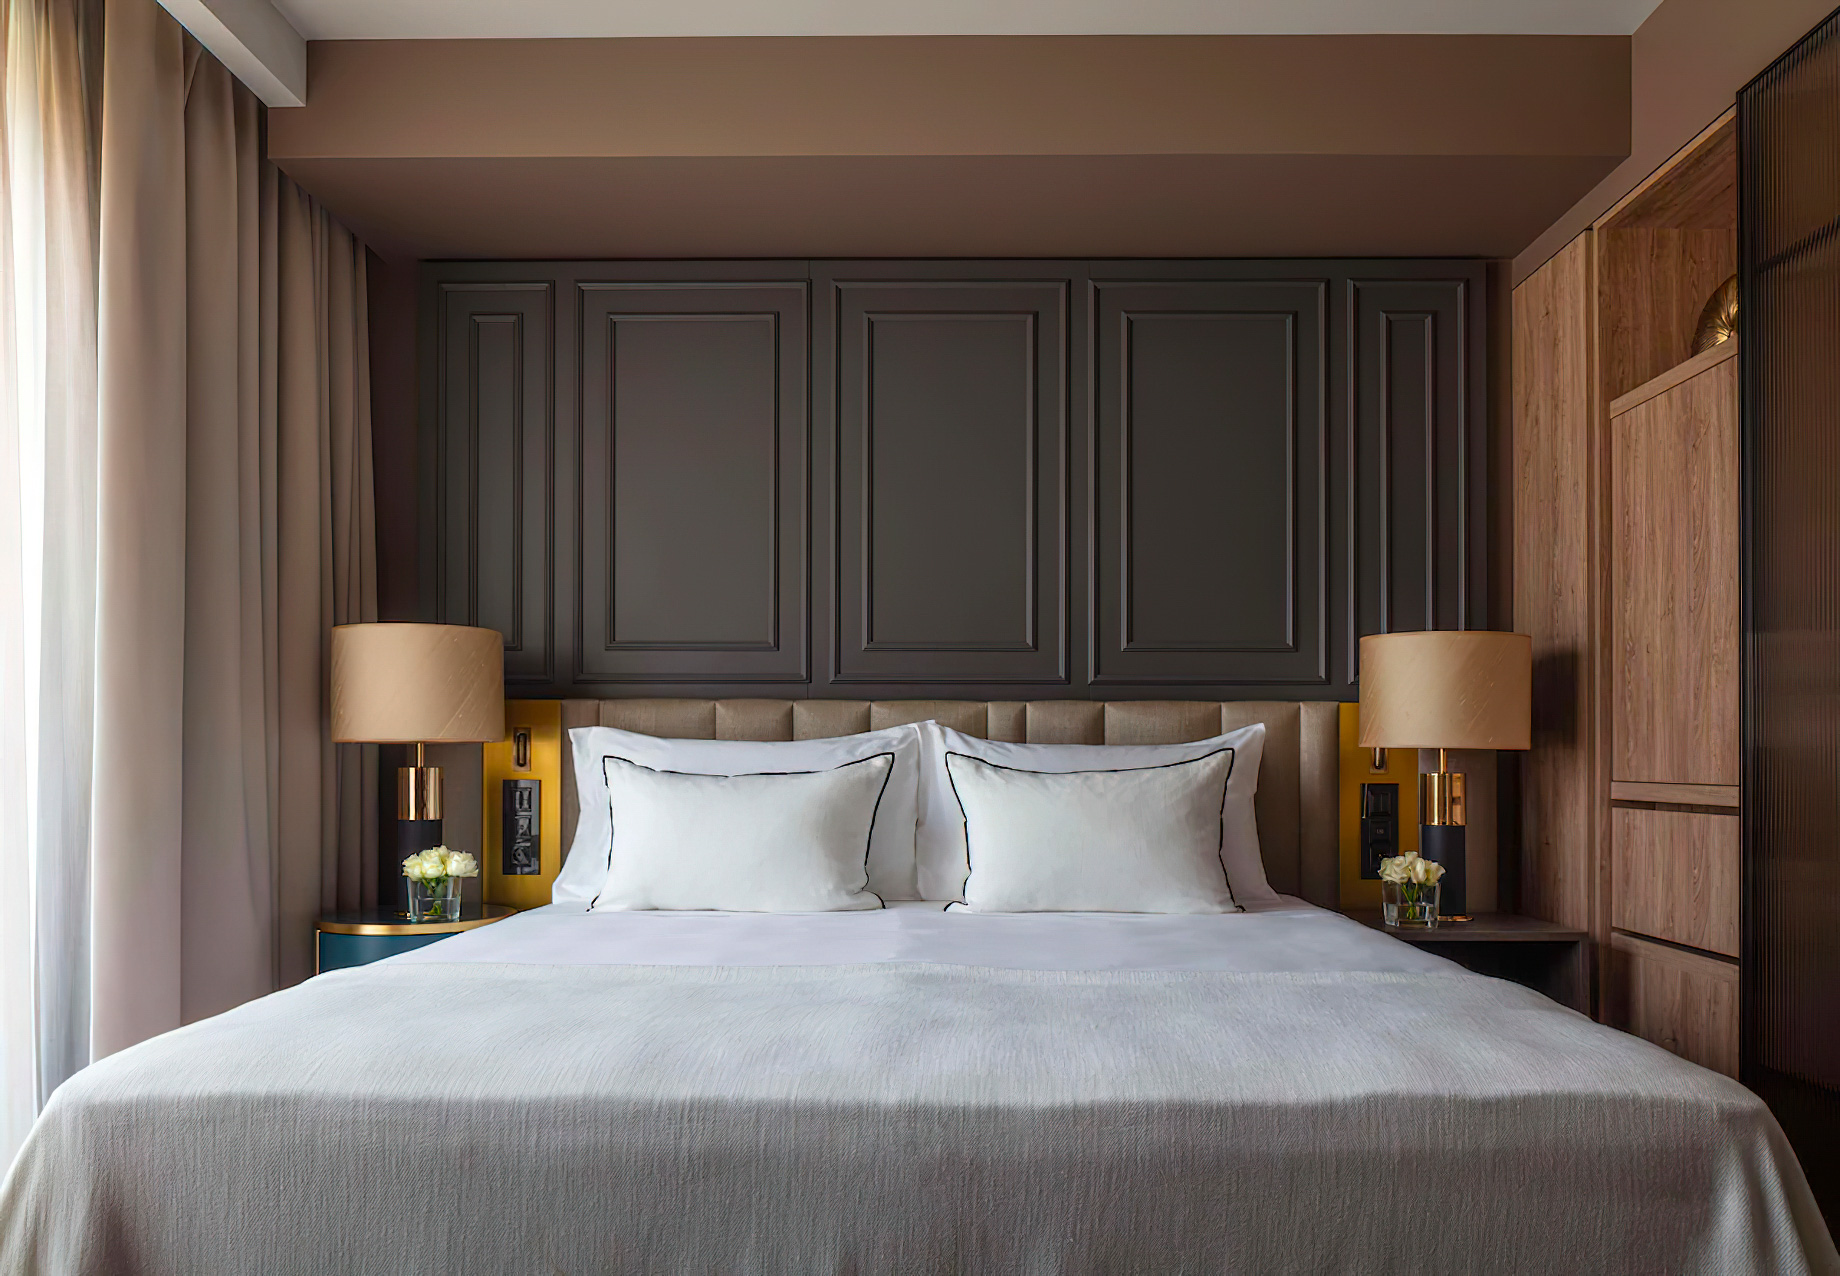 Anantara Plaza Nice Hotel – Nice, France – Deluxe Room Bed